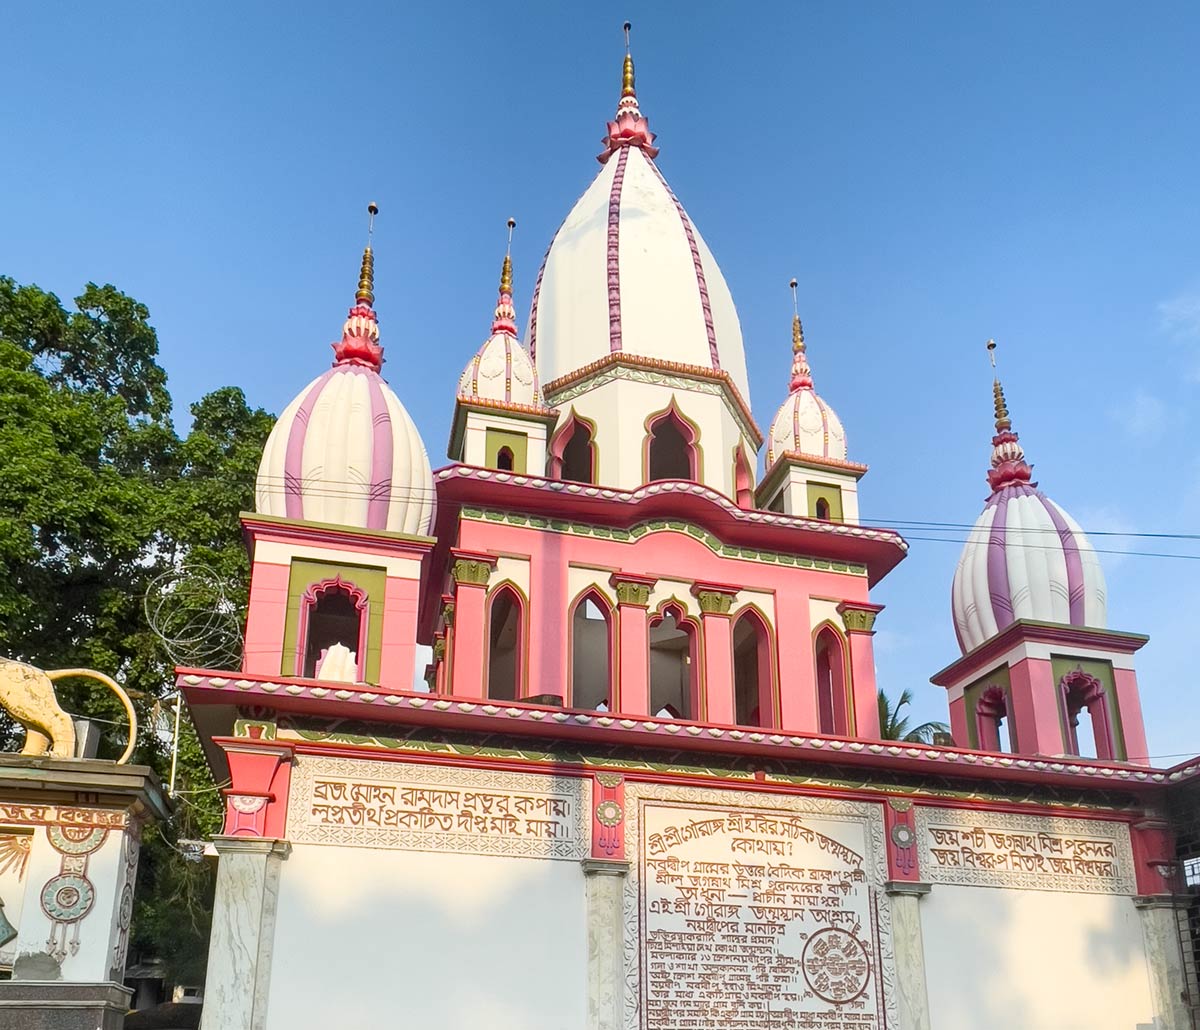 Entrance to birthplace temple of Sri Chaitanya, Nabadwip